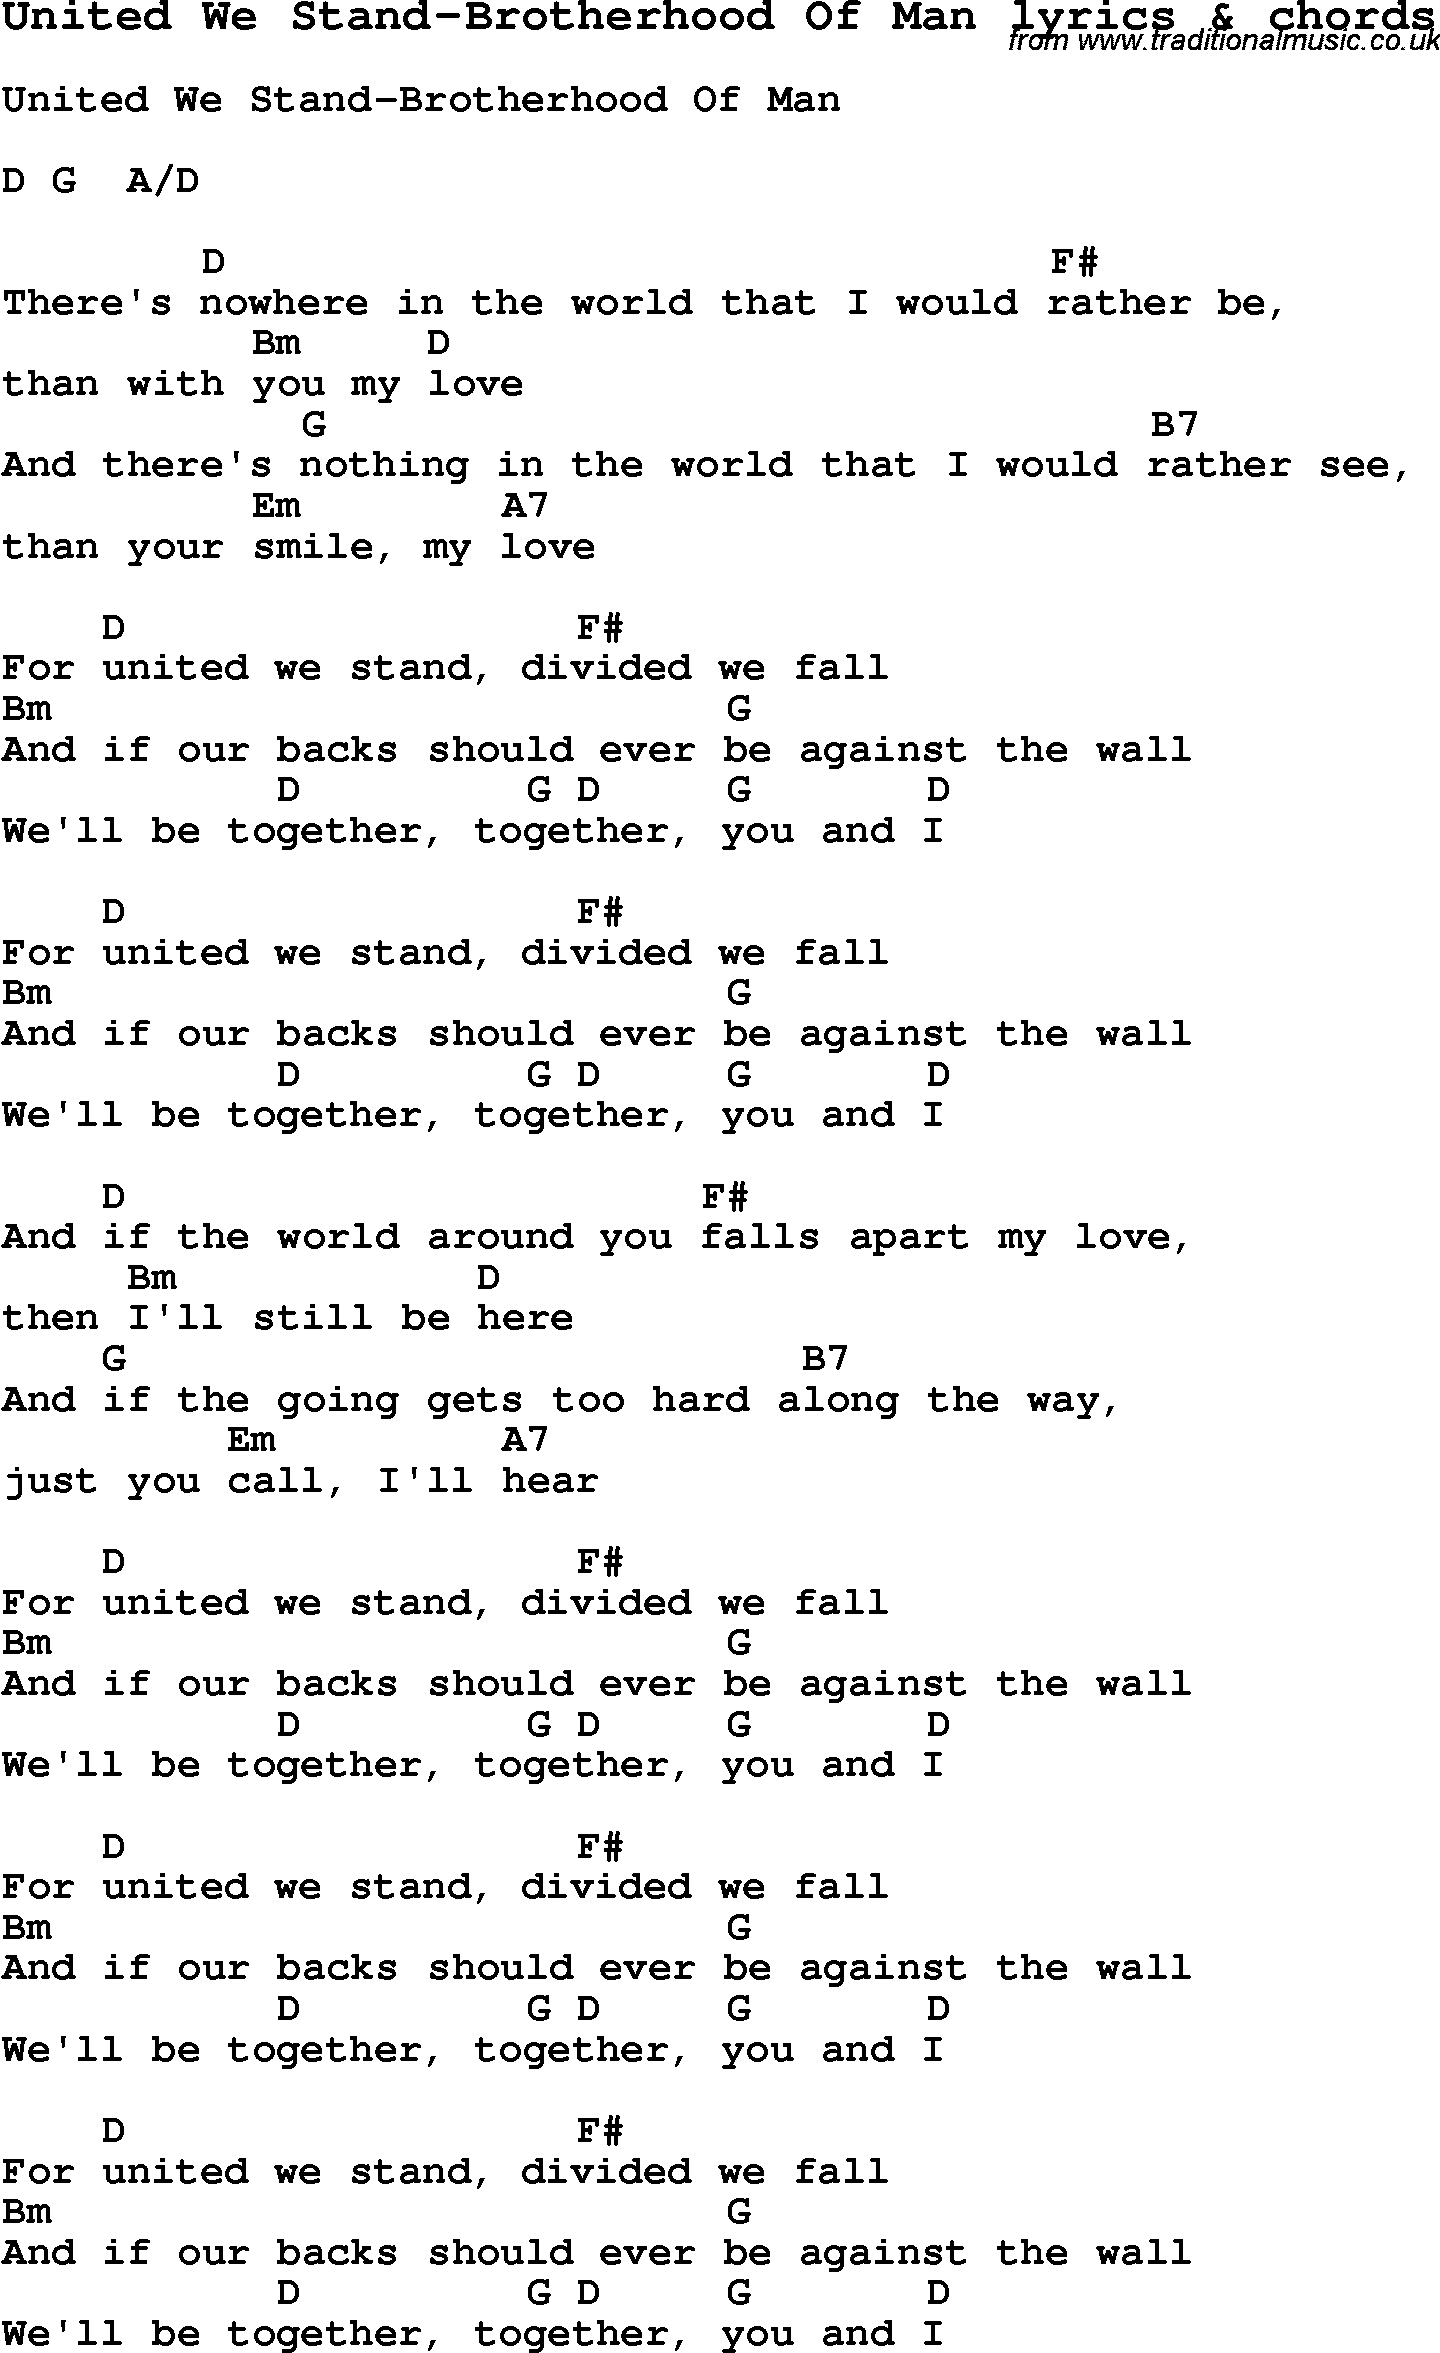 Love Song Lyrics for: United We Stand-Brotherhood Of Man with chords for Ukulele, Guitar Banjo etc.